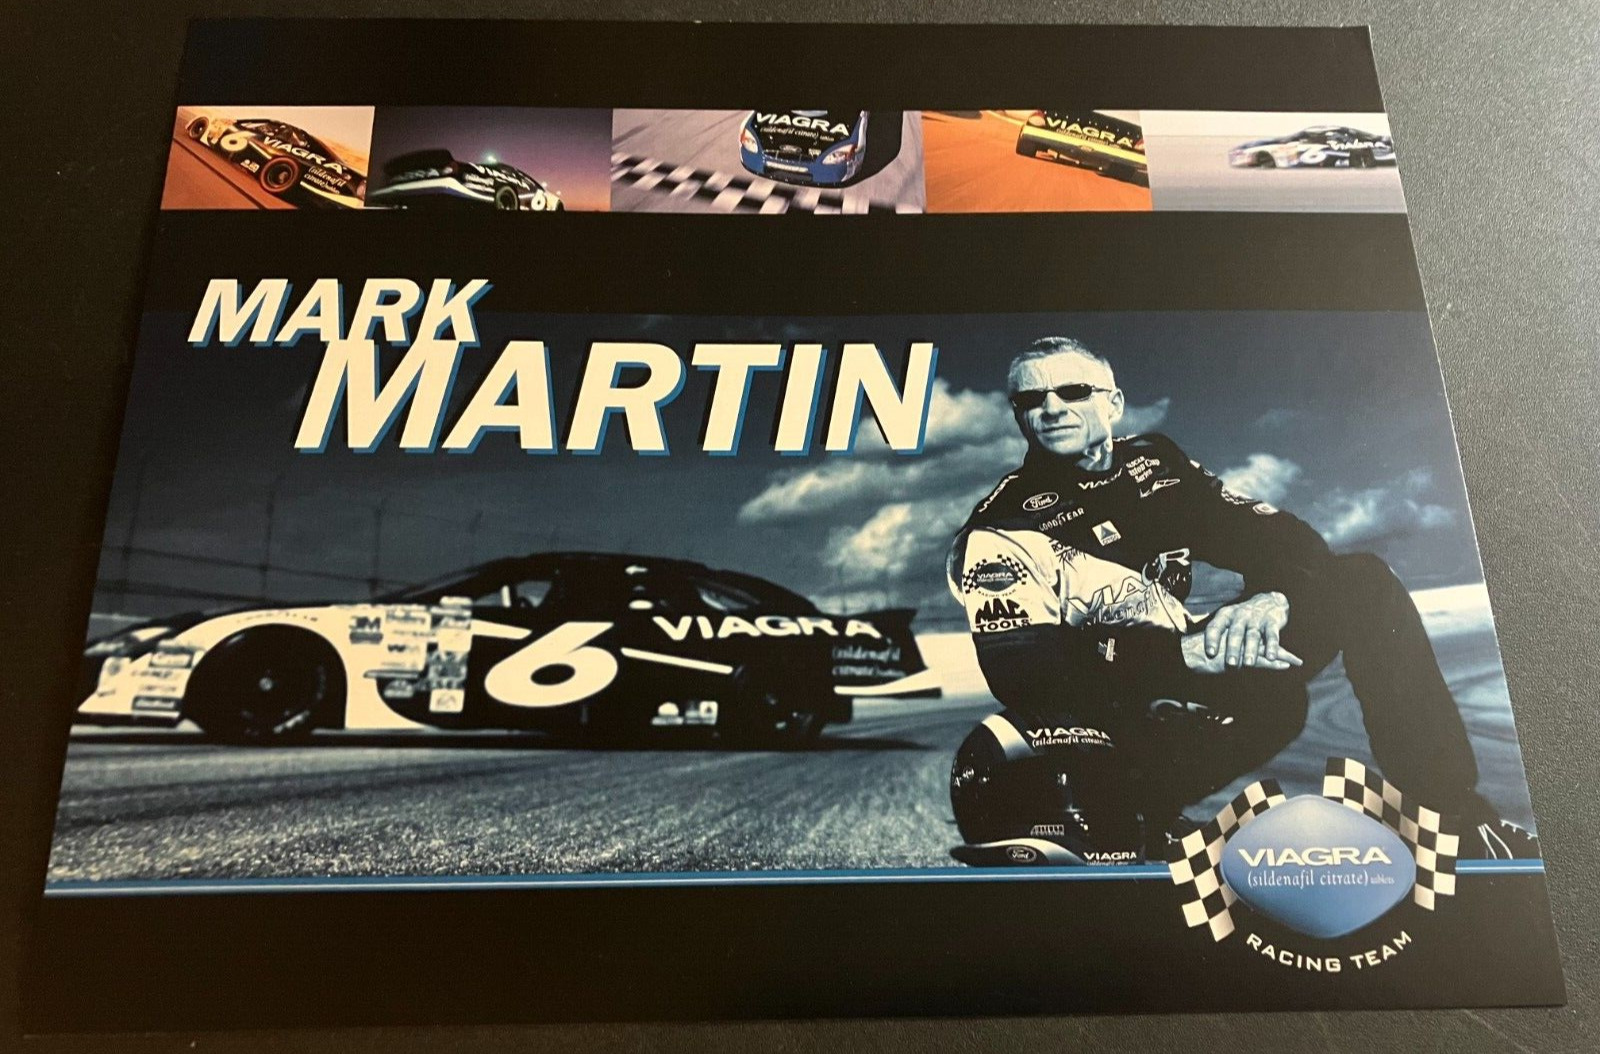 2003 Mark Martin #6 Viagra Ford Taurus - NASCAR Winston Cup Hero Card Handout